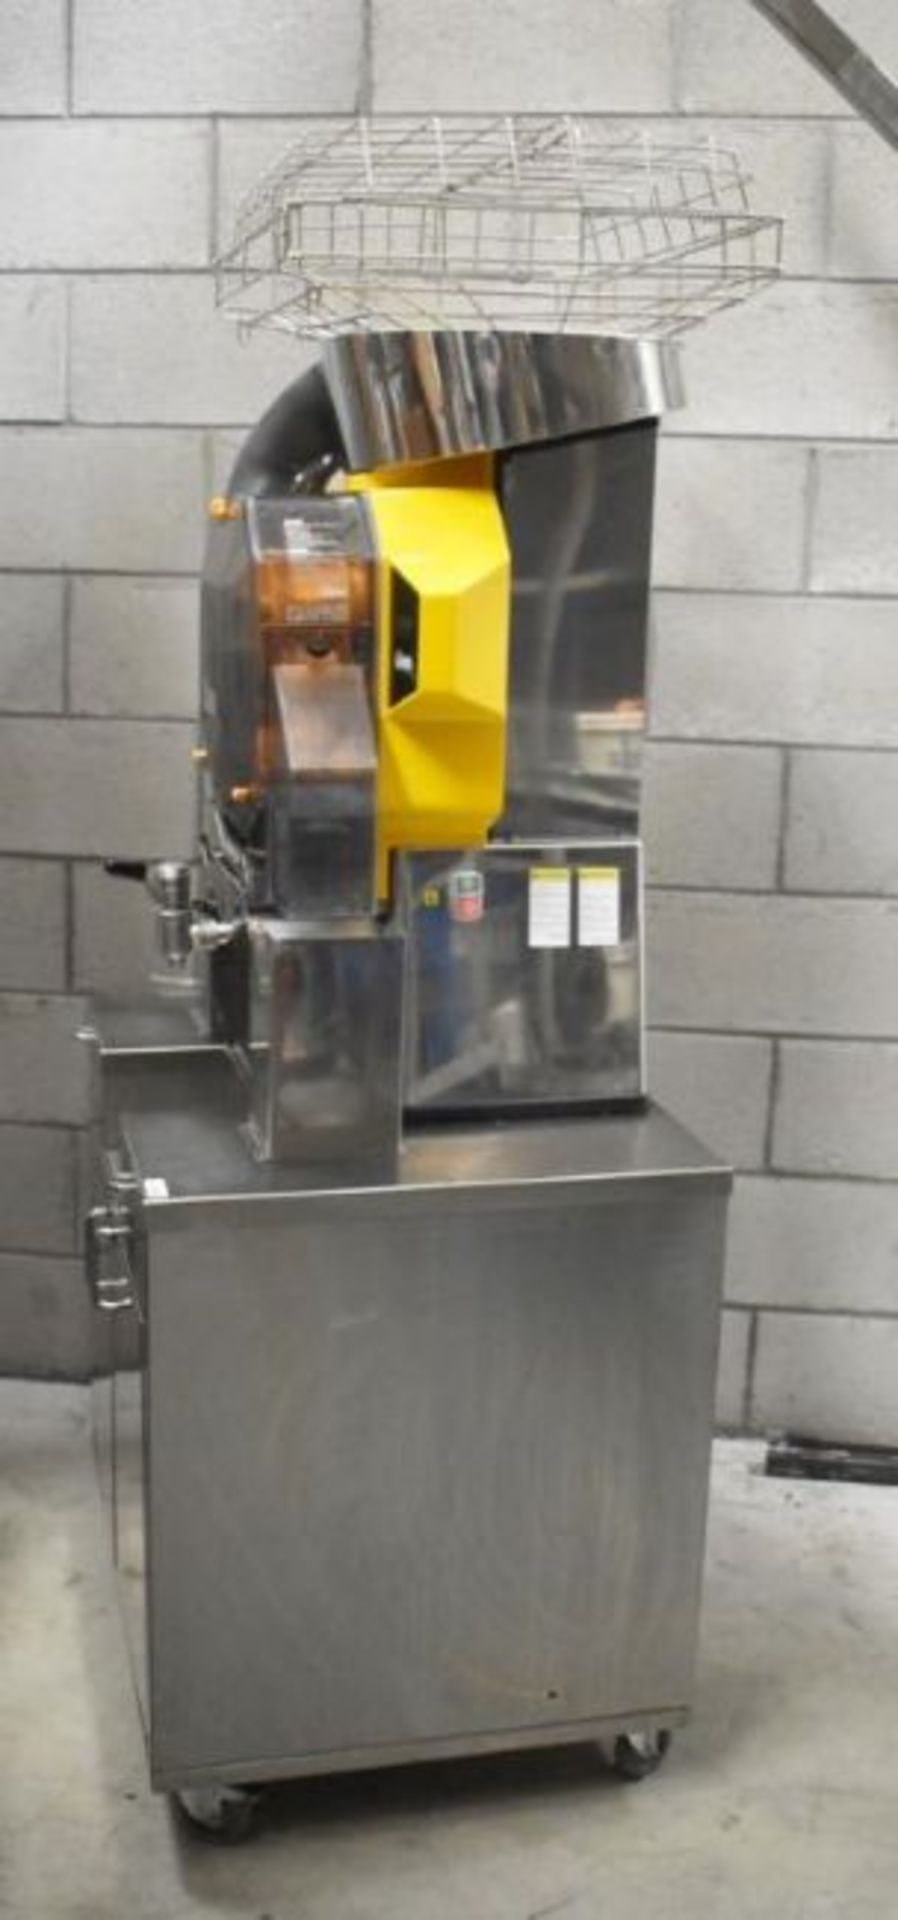 1 x Zumex Speed S +Plus Self-Service Podium Commercial Citrus Juicer - Manufactured in 2018 - - Image 7 of 20